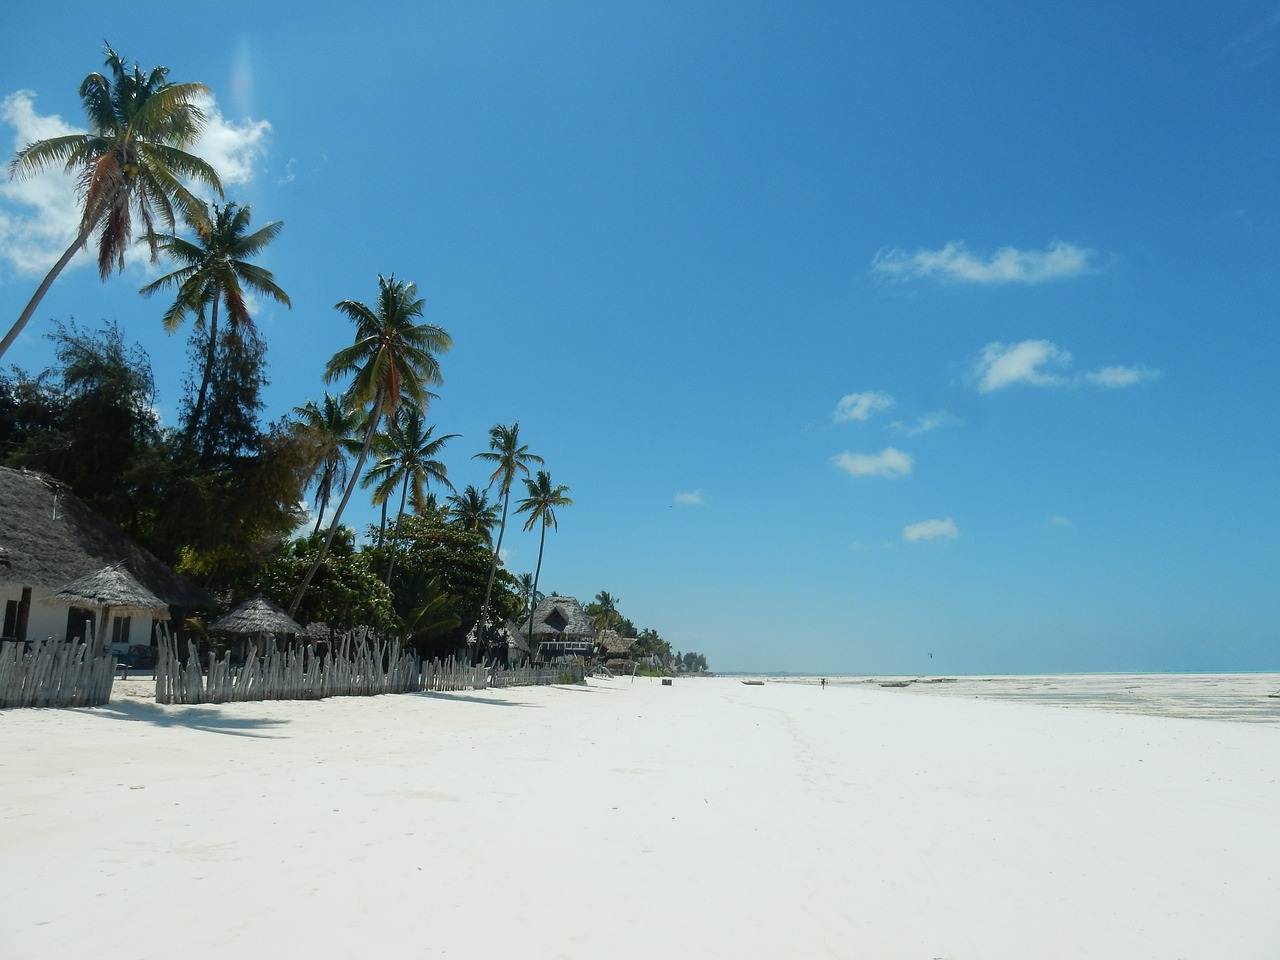 Uma praia de areia branca na ilha de Zanzibar